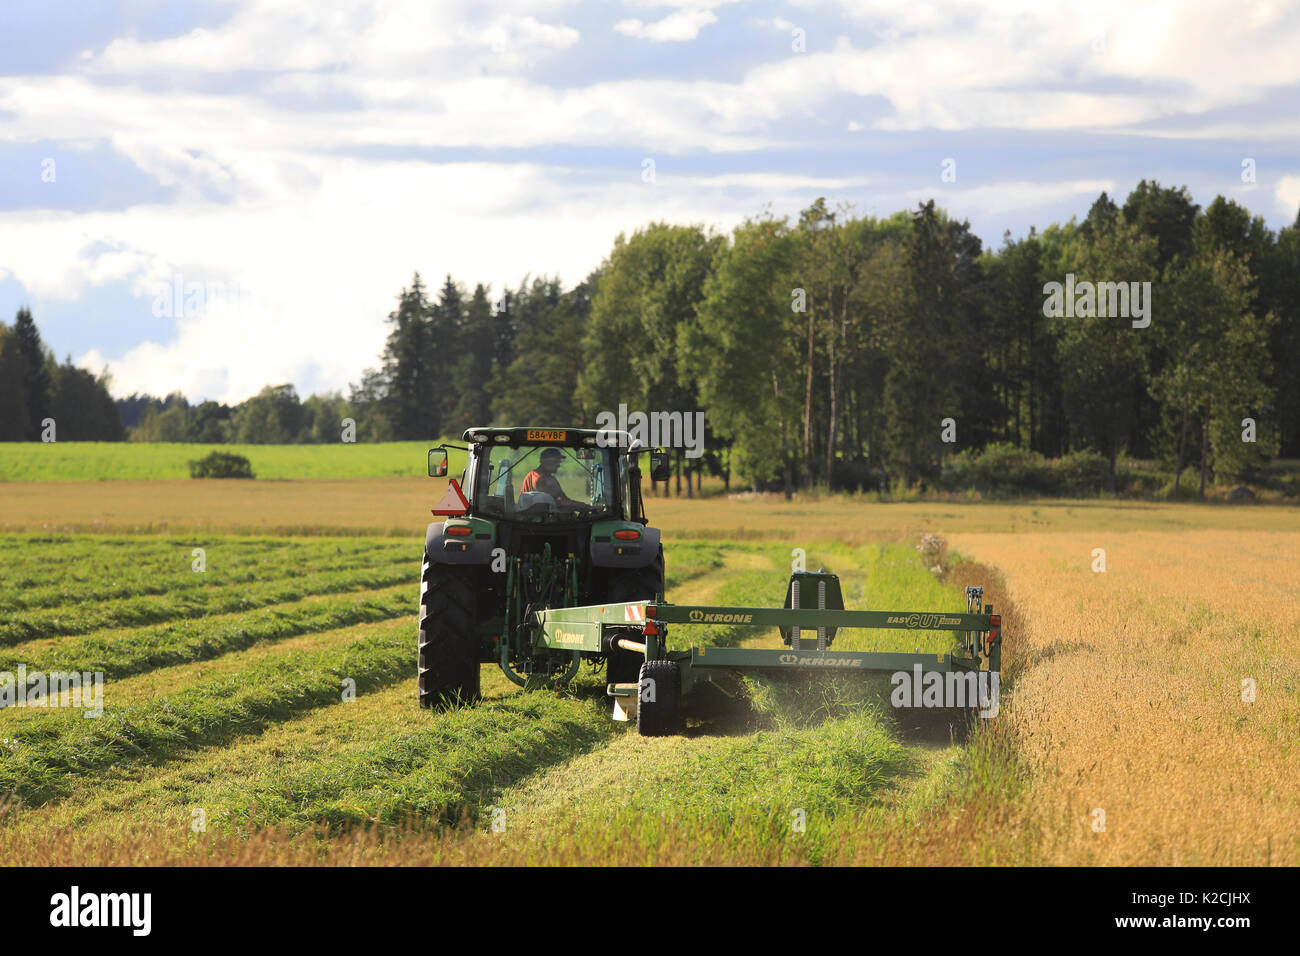 JOKIOINEN, FINLAND - AUGUST 25, 2017: Farmer cuts hay with Krone EasyCut 3600 CV mower pulled by John Deere tractor on late summer evening. Stock Photo